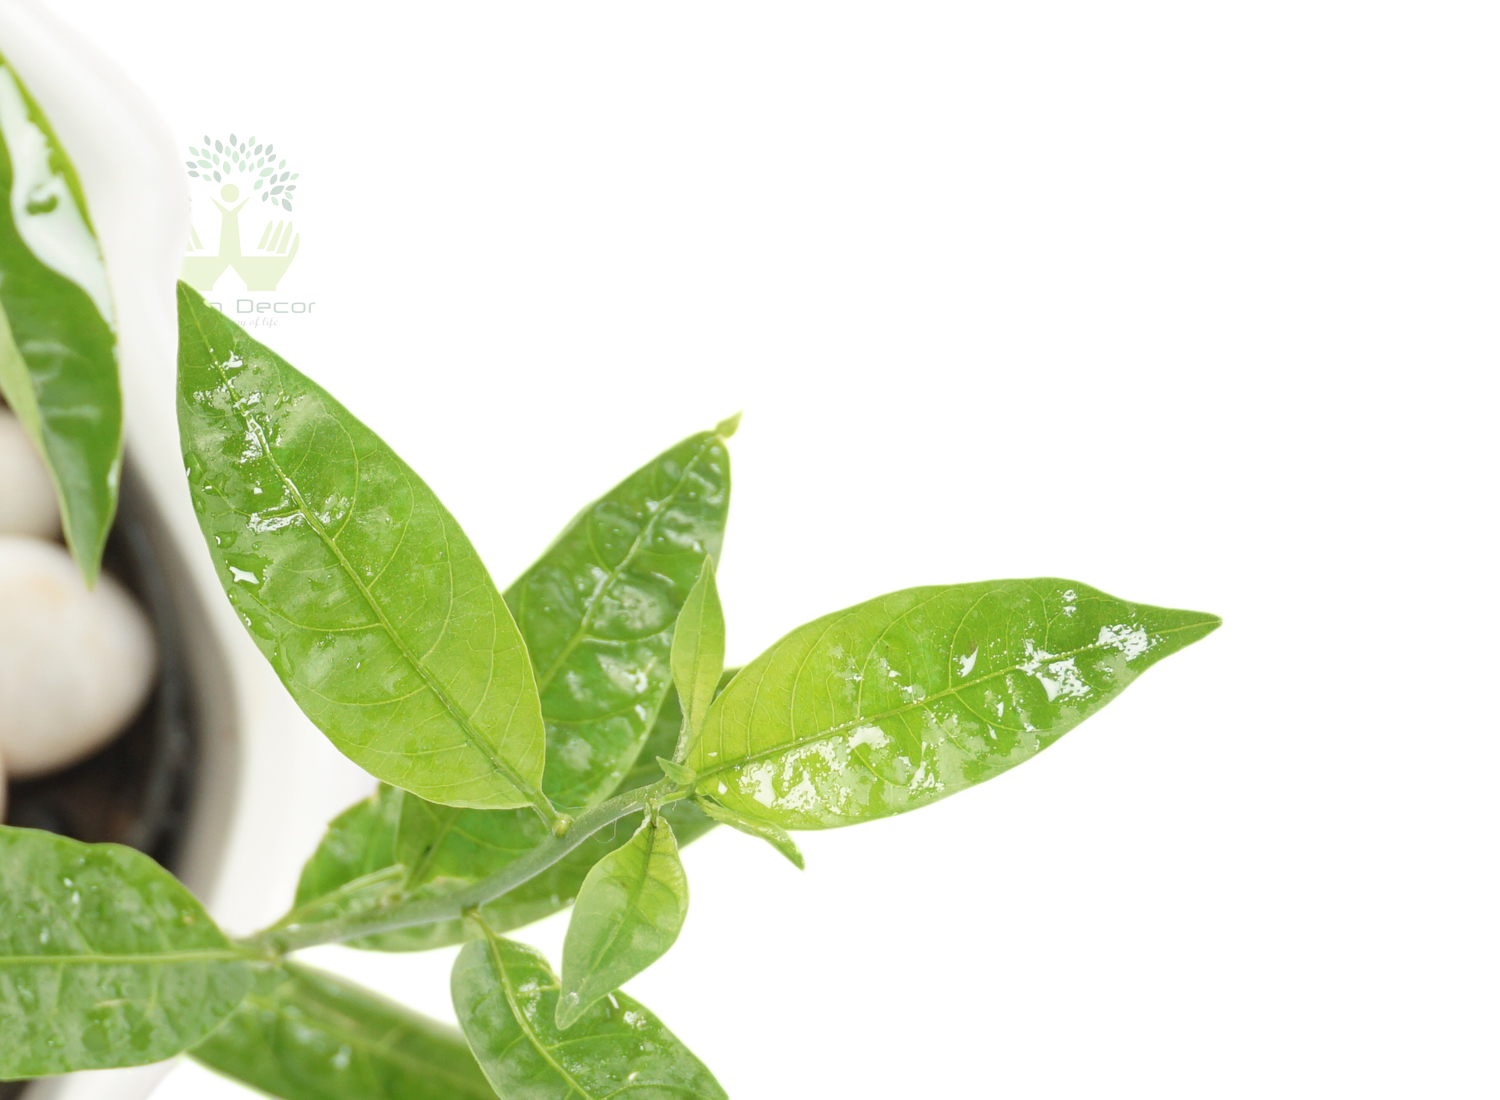 Buy Raat ki Rani Plants Leaves View , White Pots and seeds in Delhi NCR by the best online nursery shop Greendecor.